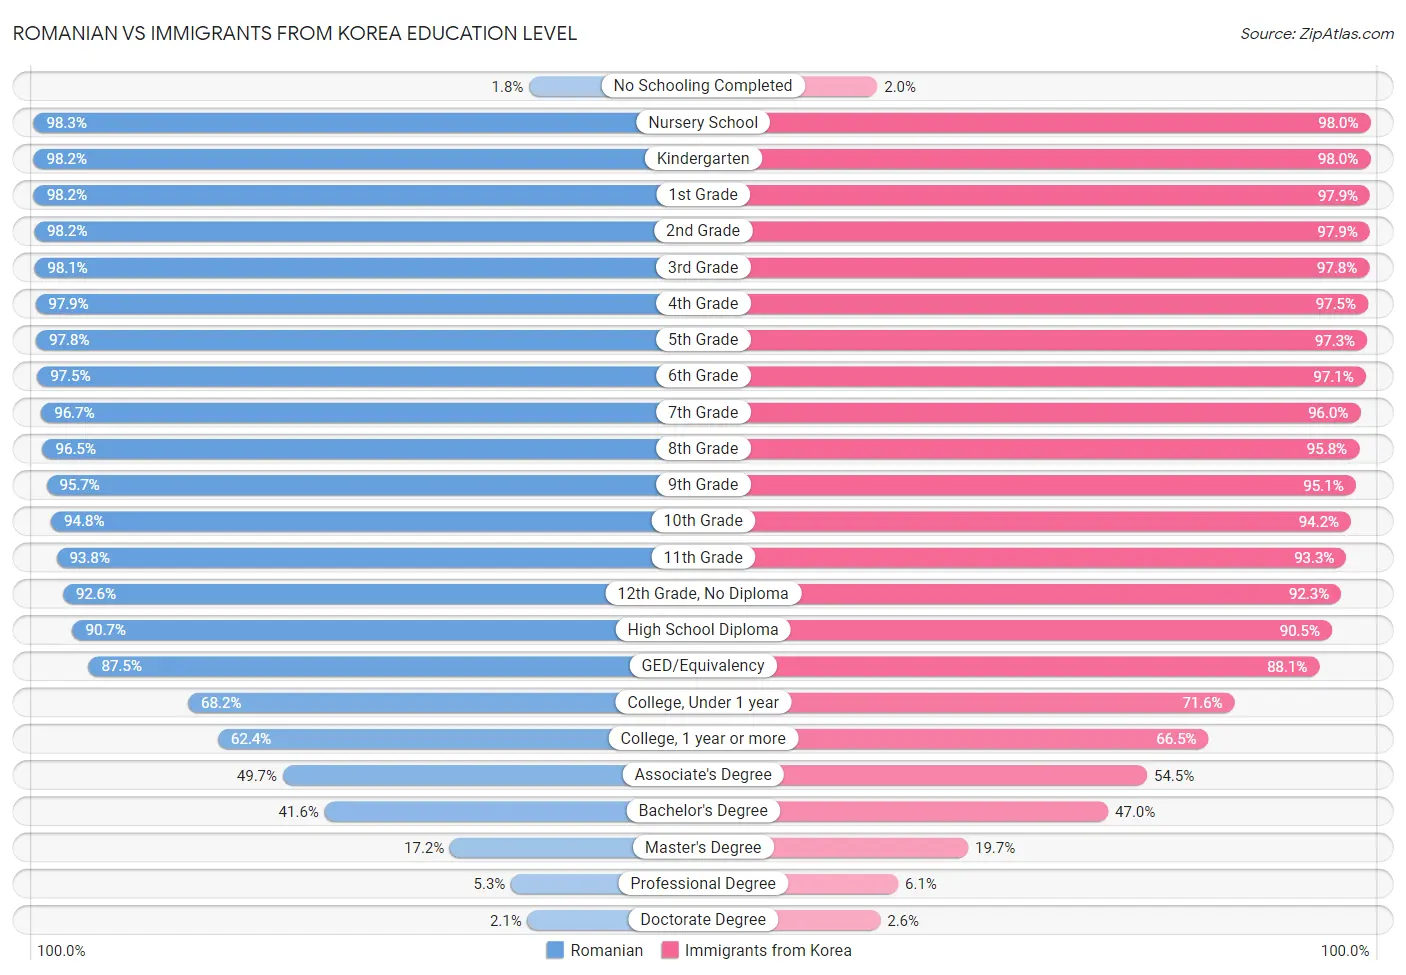 Romanian vs Immigrants from Korea Education Level